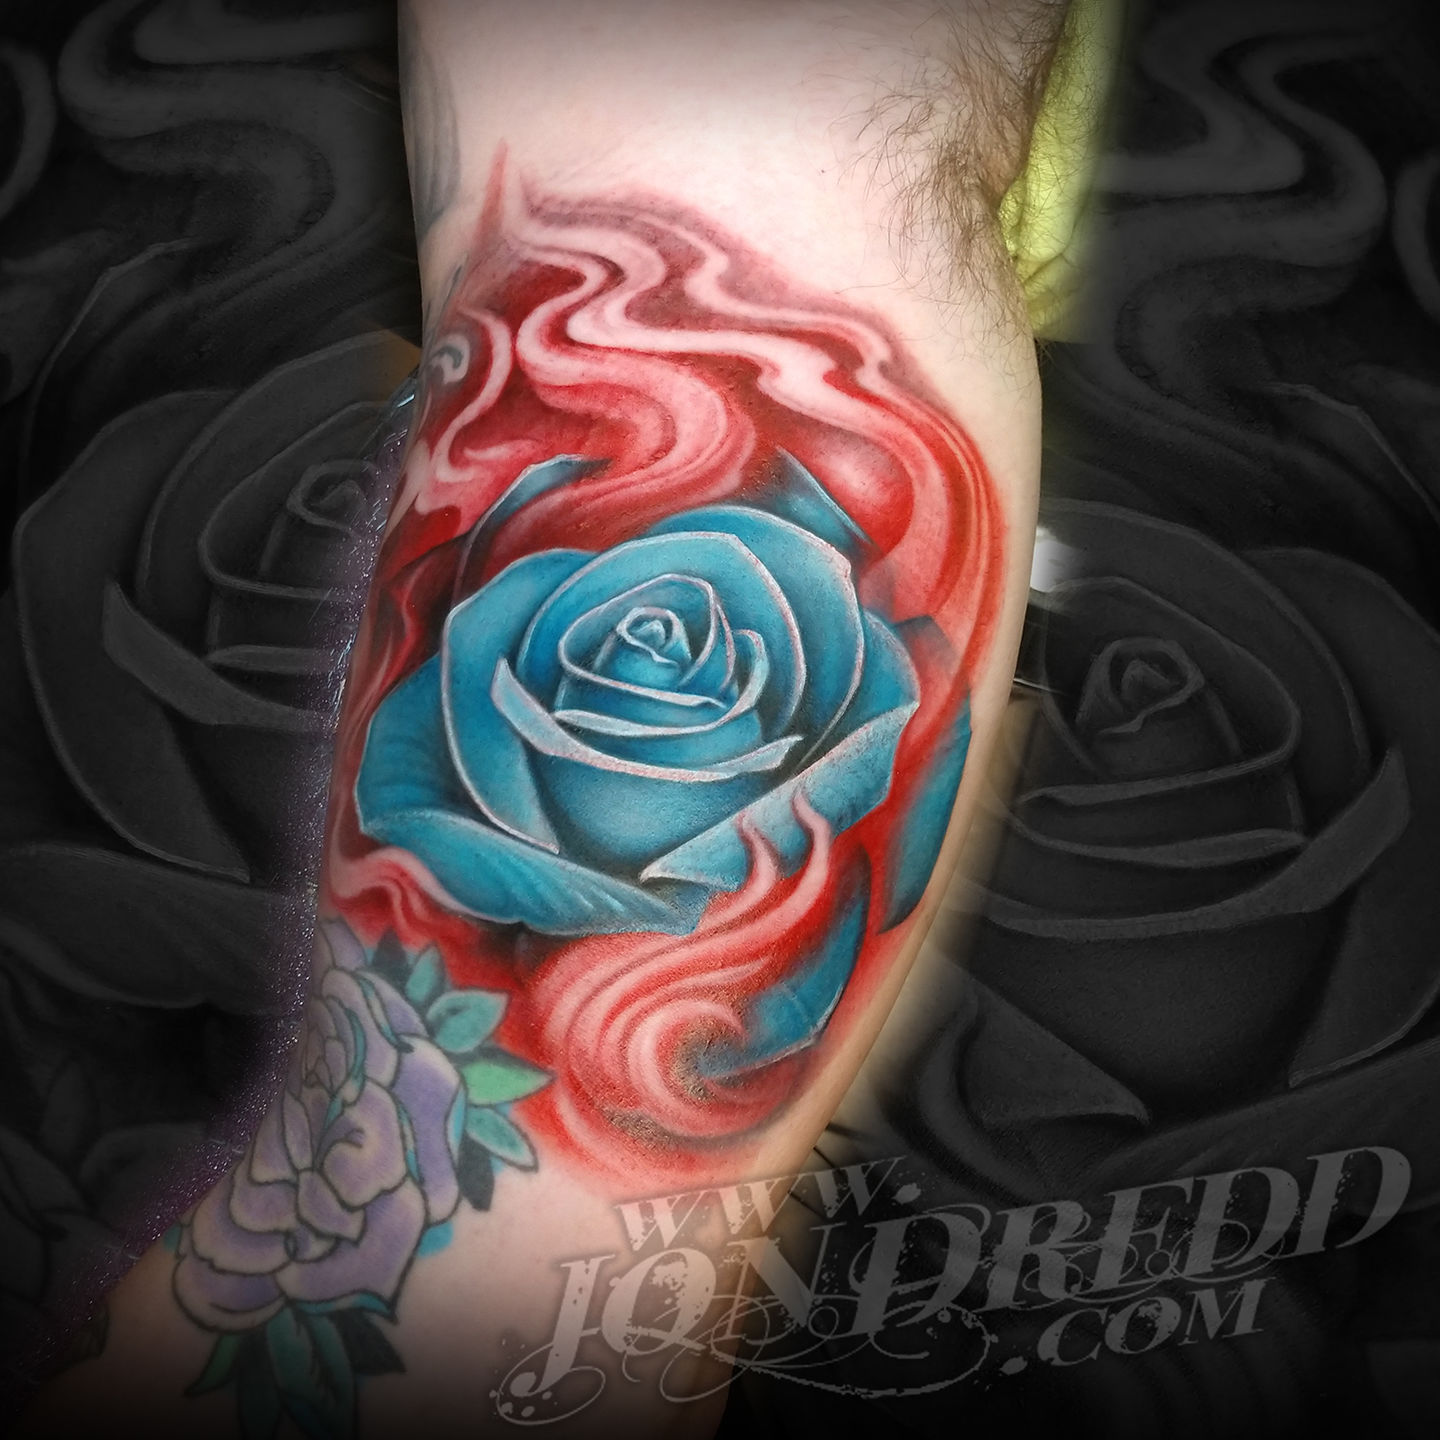 Tattoo uploaded by Red Baron Ink  Blue rose tattoo by Szabla  Tattoodo